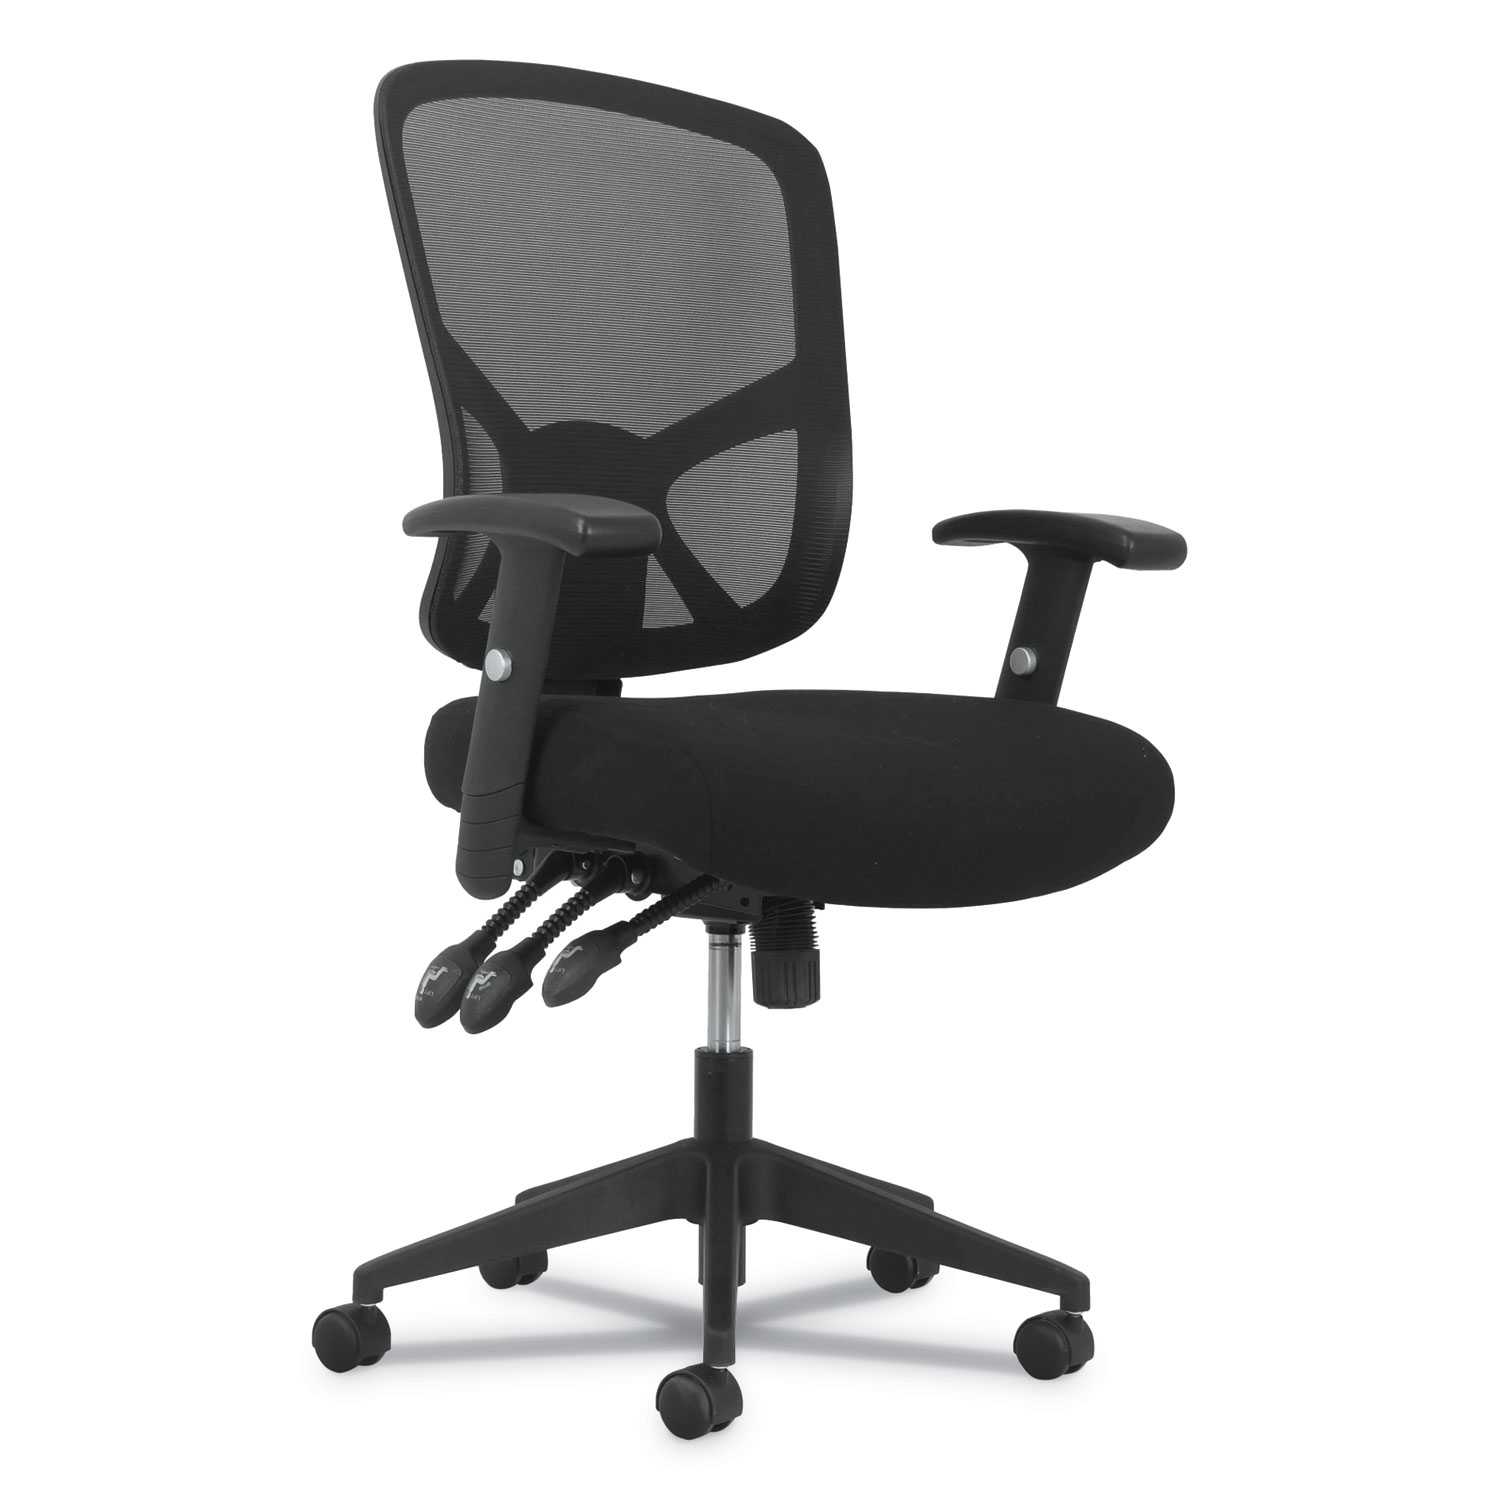 1-Twenty-One High-Back Task Chair, Black Mesh Back/Black Fabric Seat